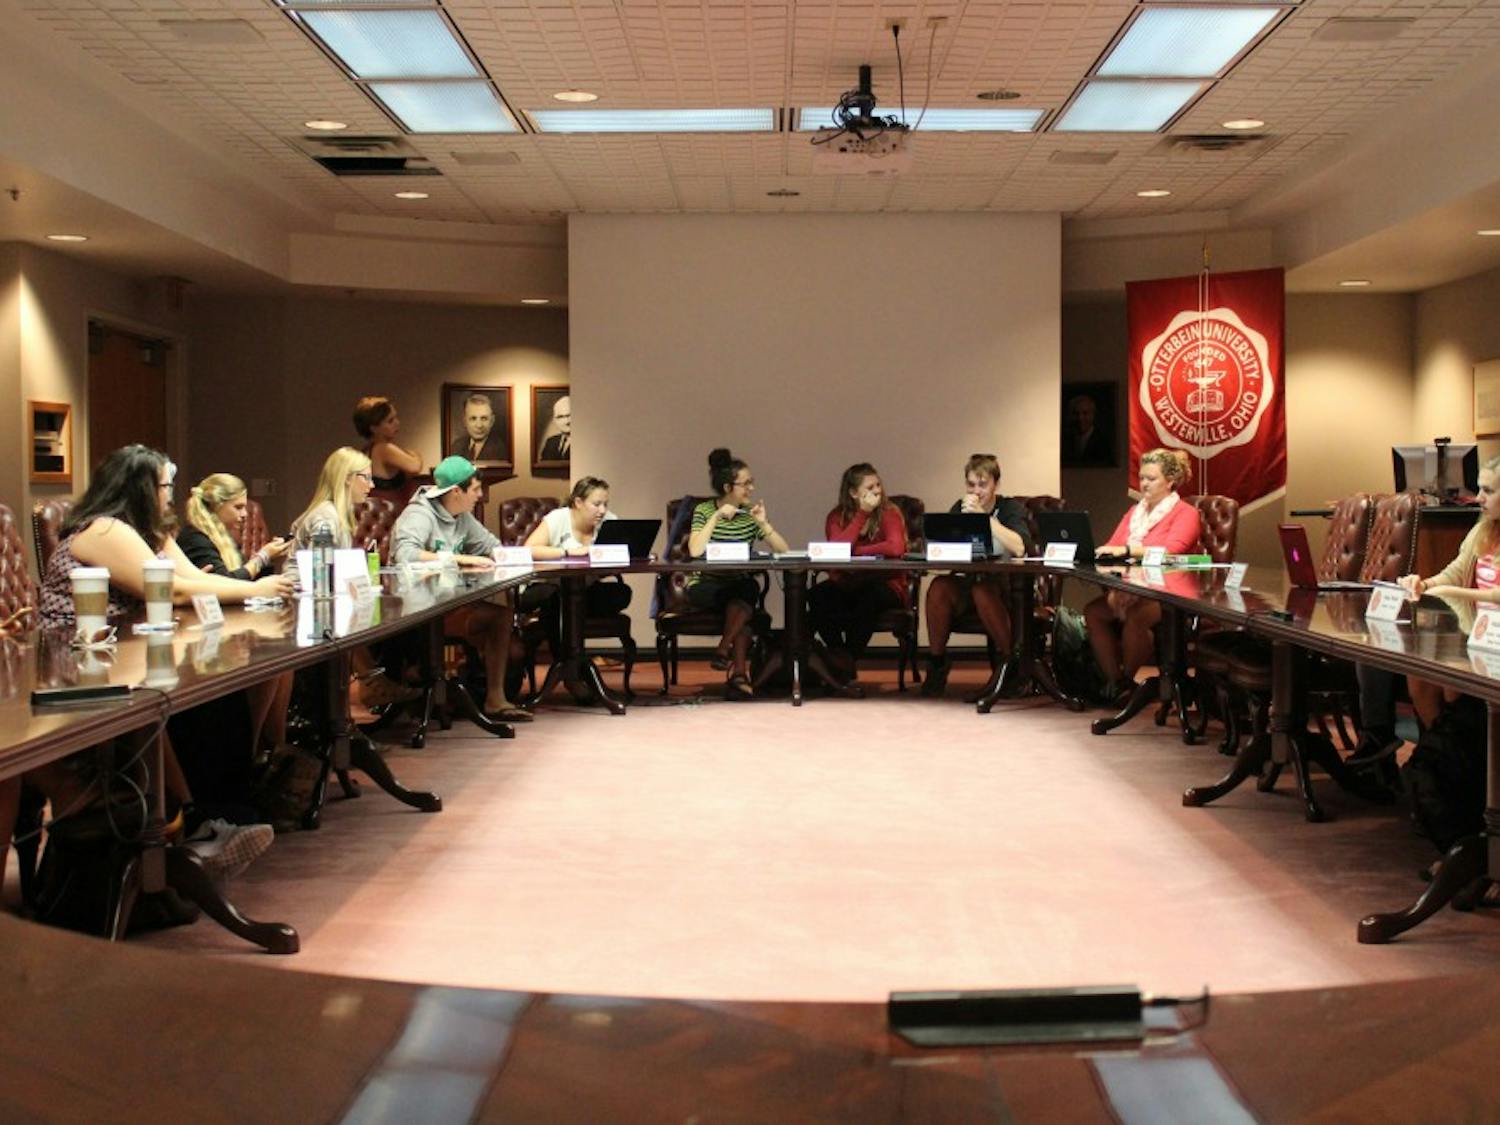 Student Senators gather to discuss important campus issues.